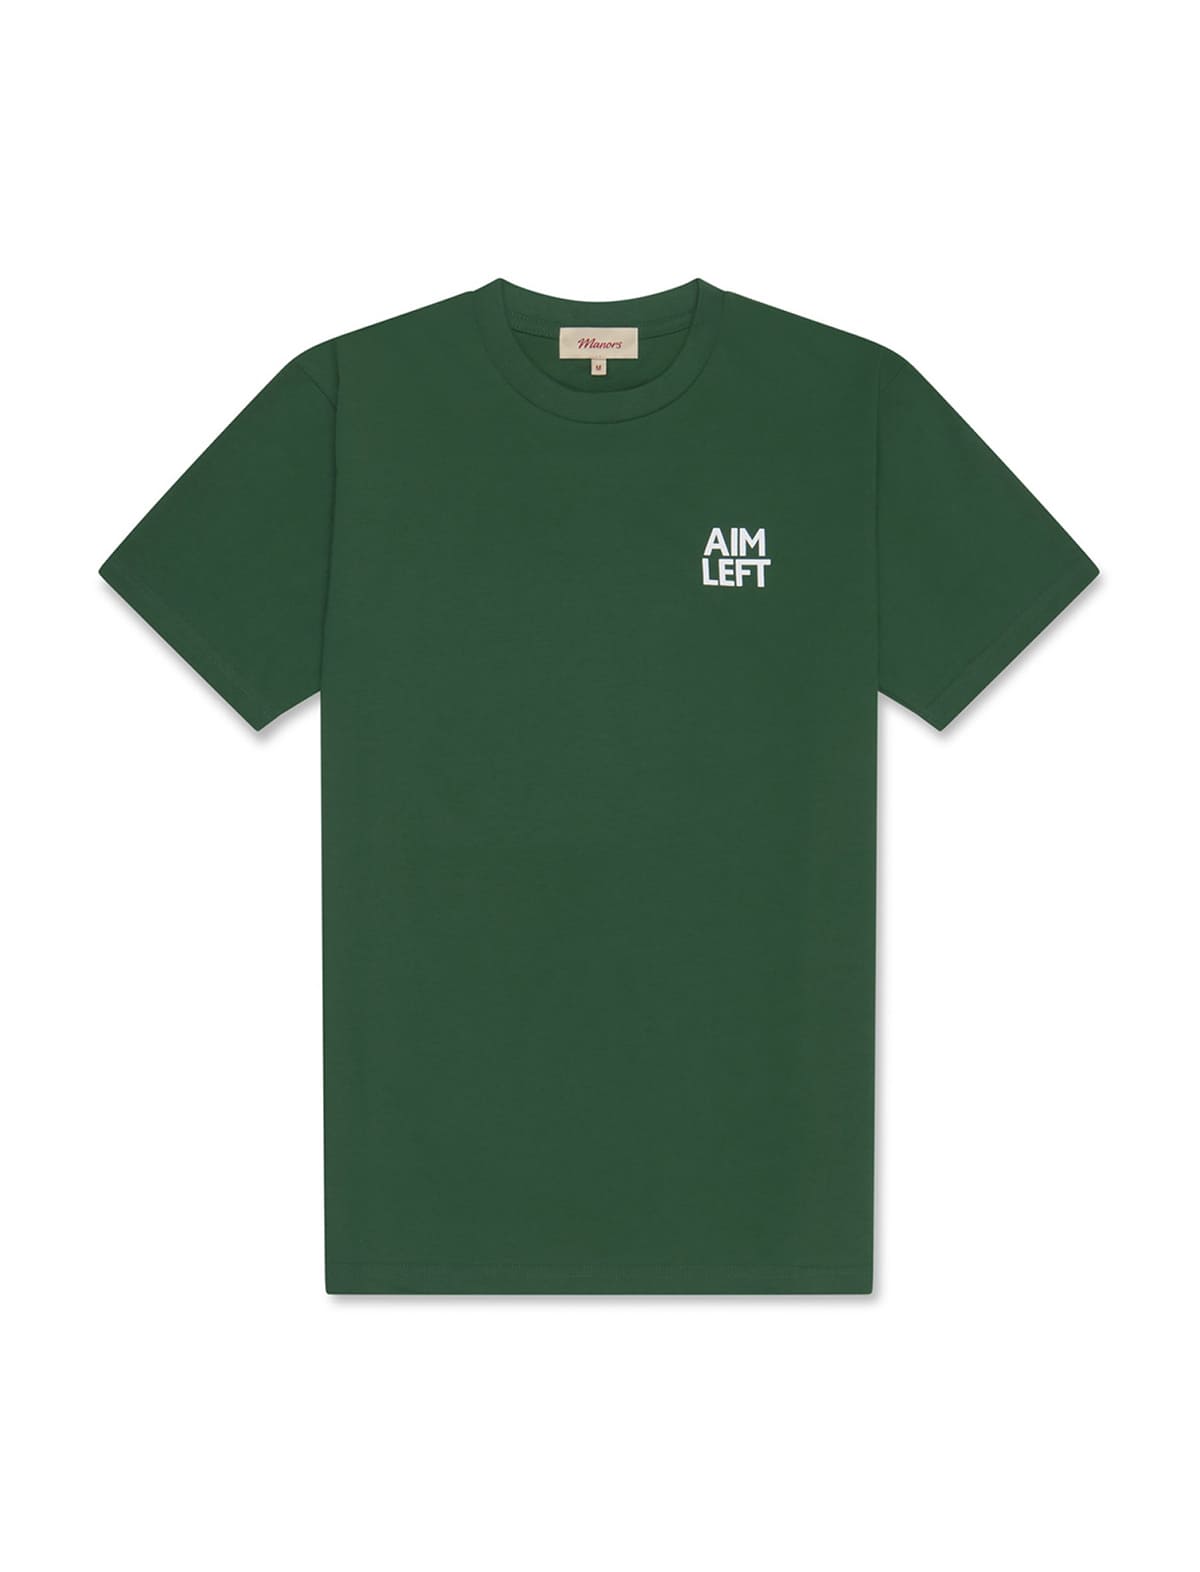 MANORS GOLF Big Slice T-Shirt in Green